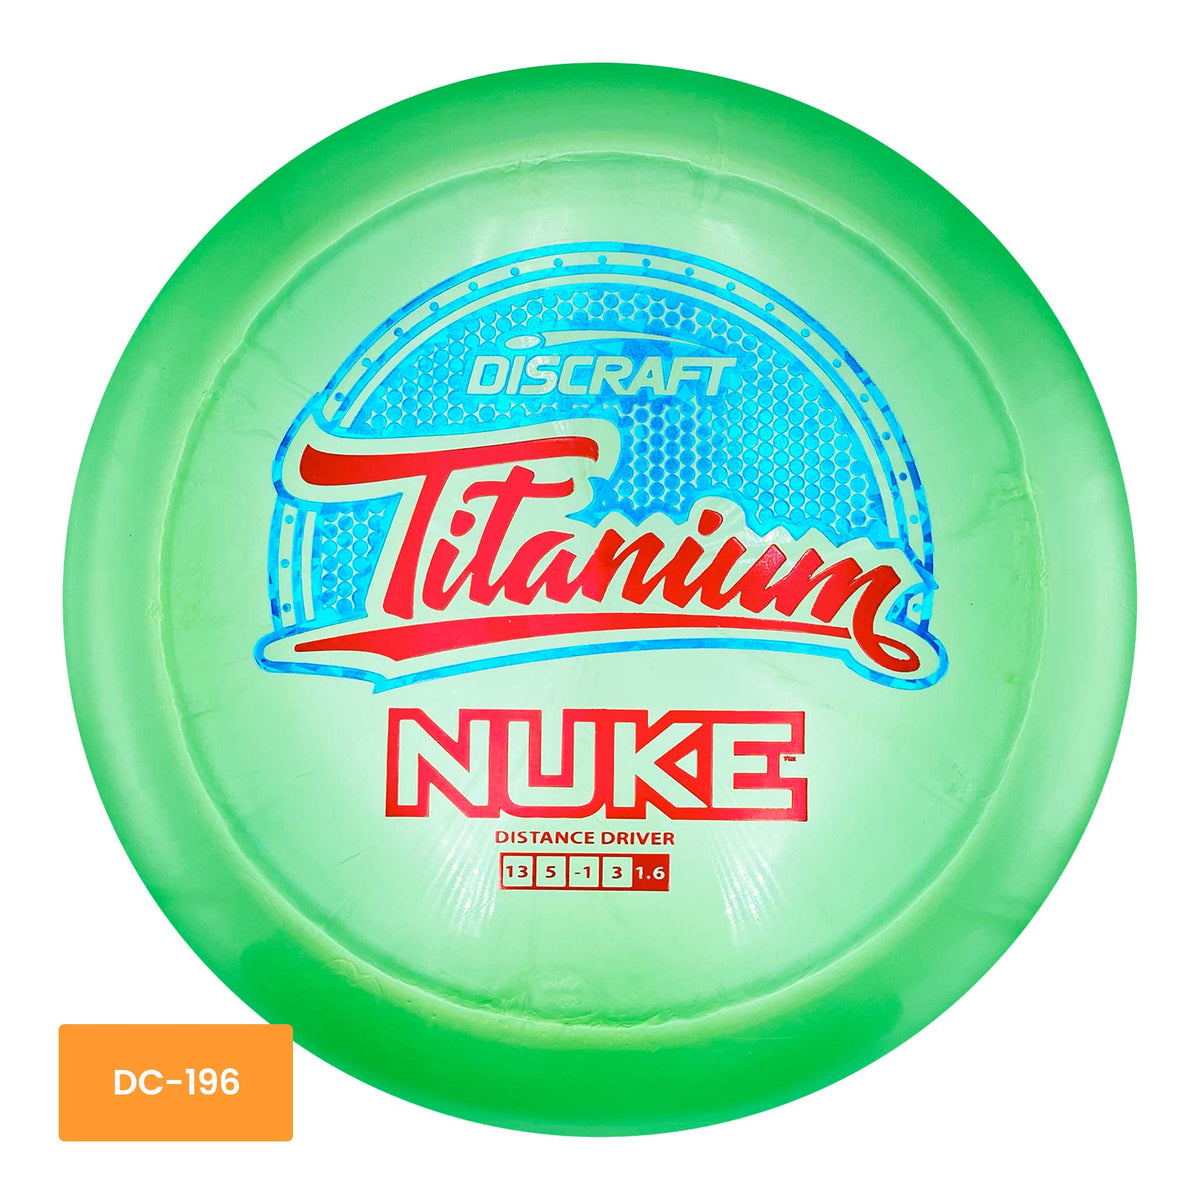 Discraft Titanium Nuke distance driver - Green